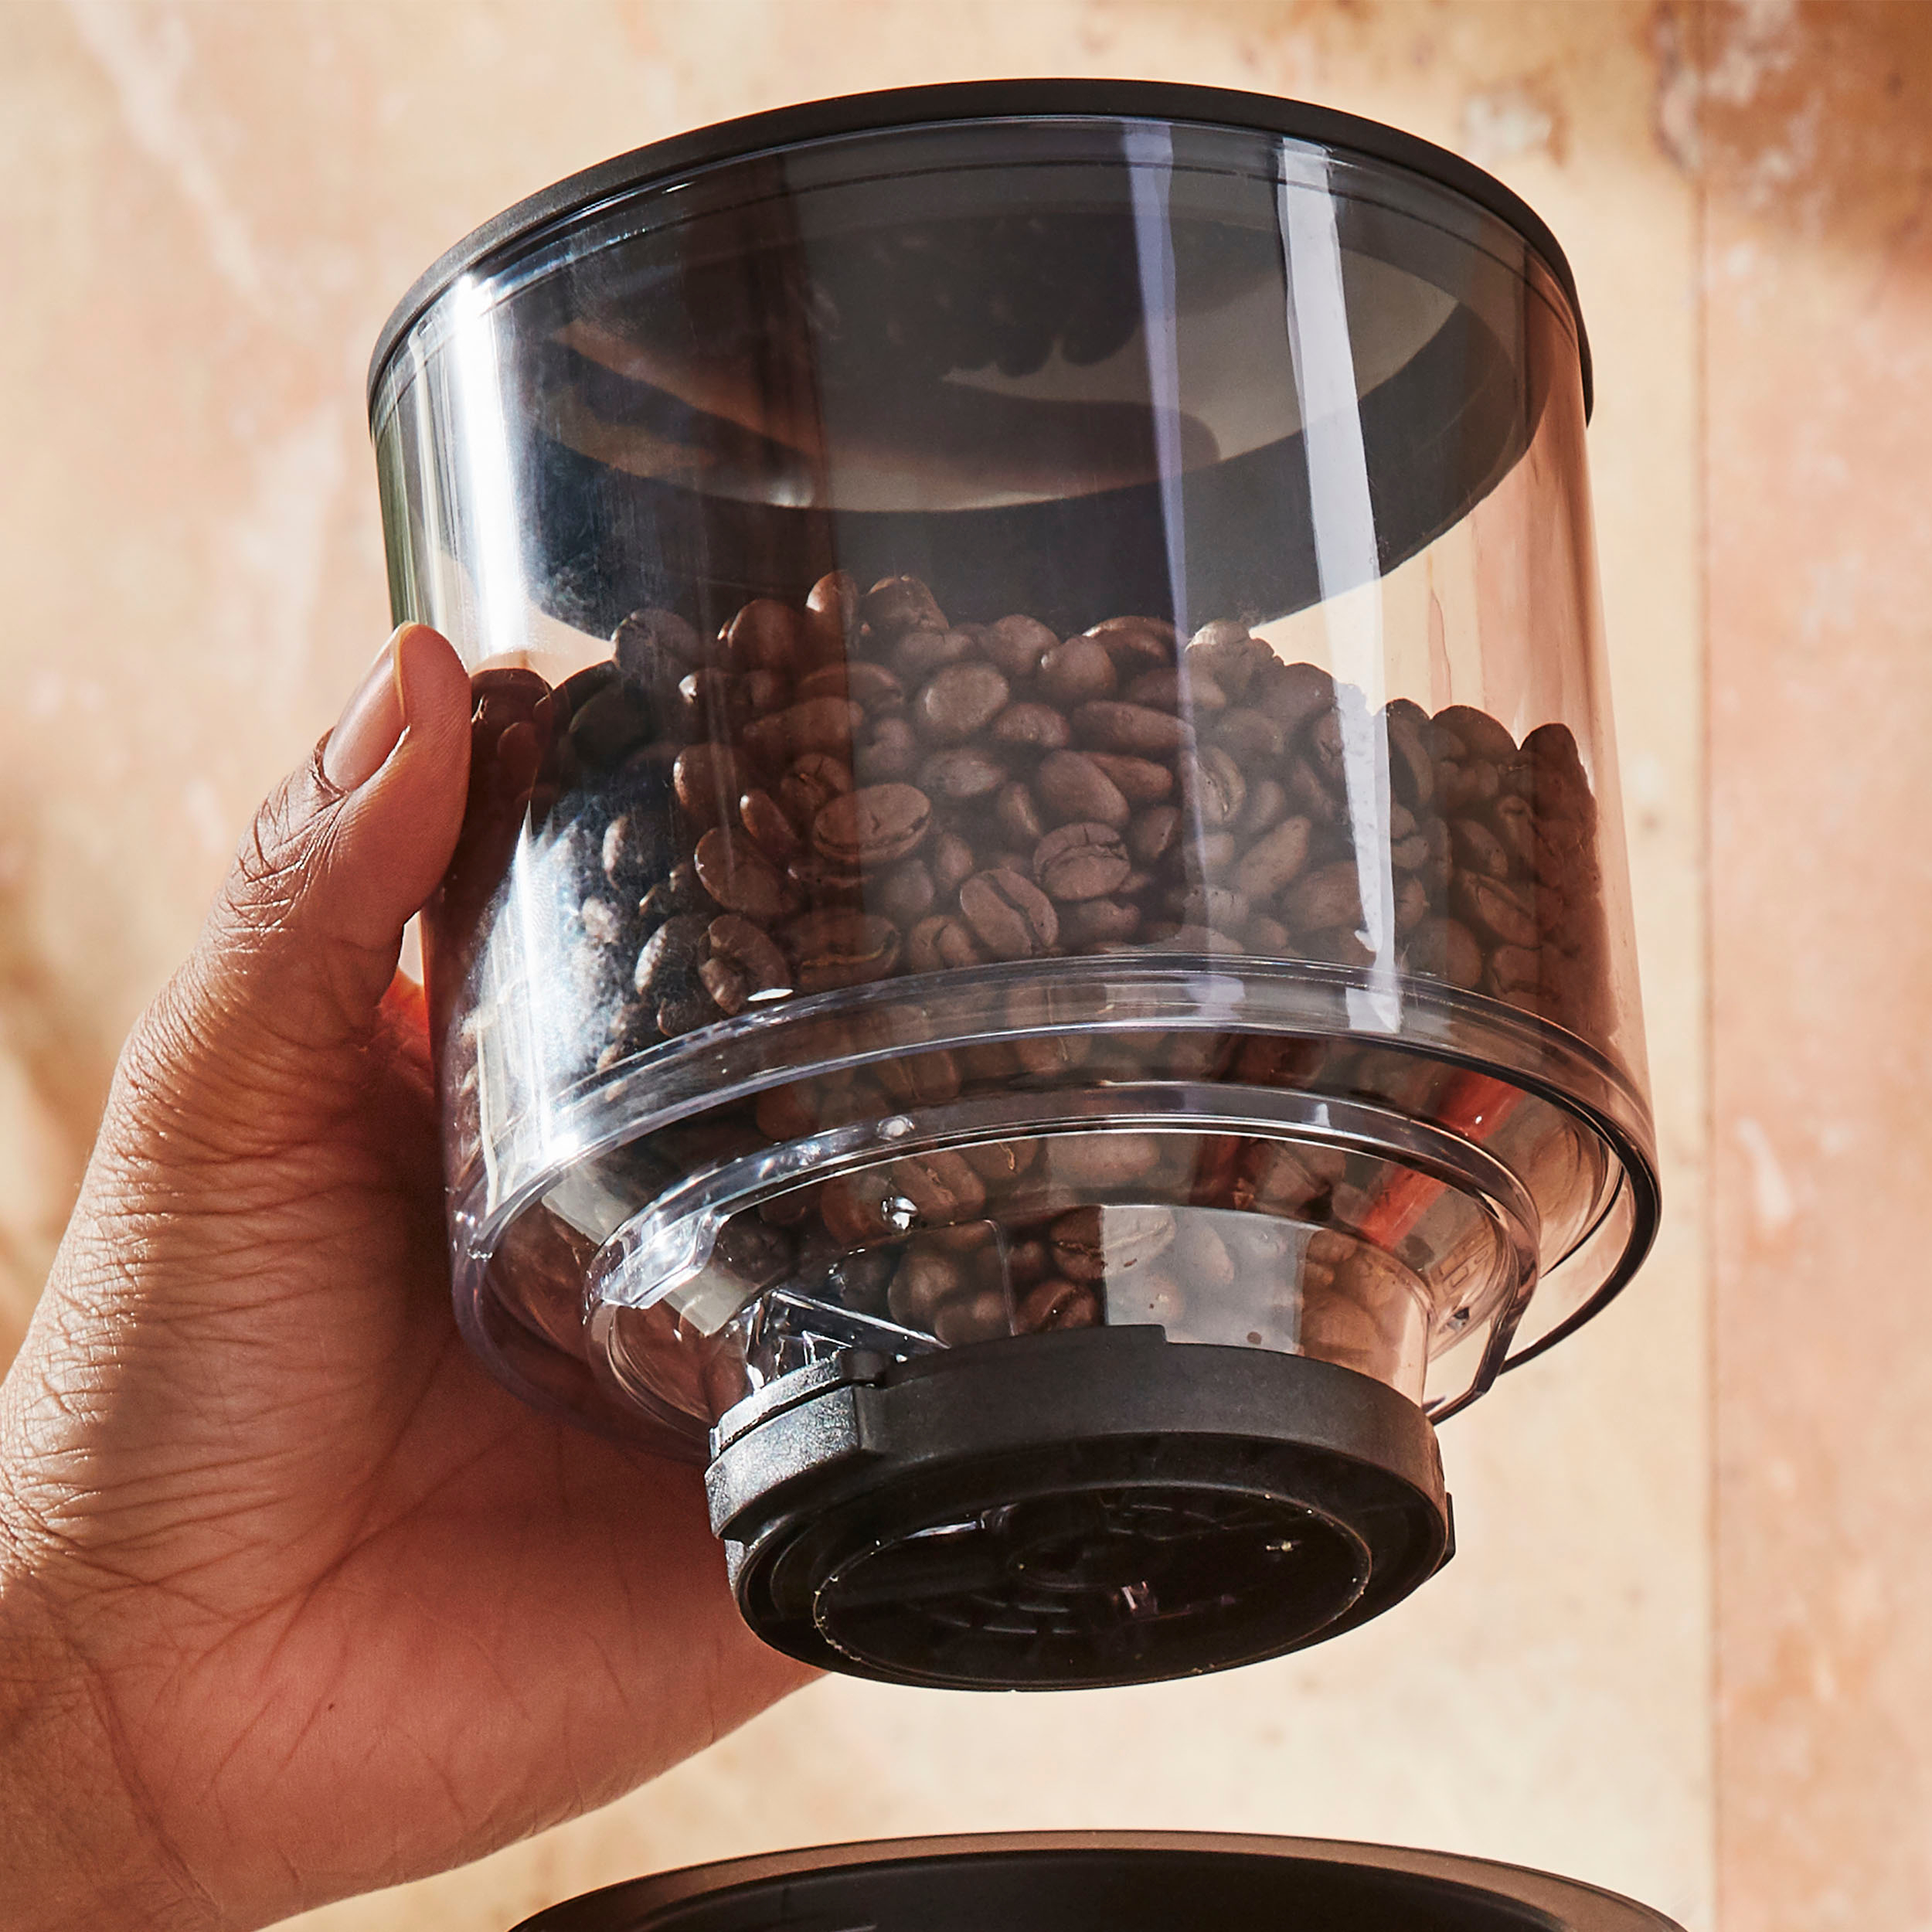 KitchenAid Proline Grinder » CoffeeGeek